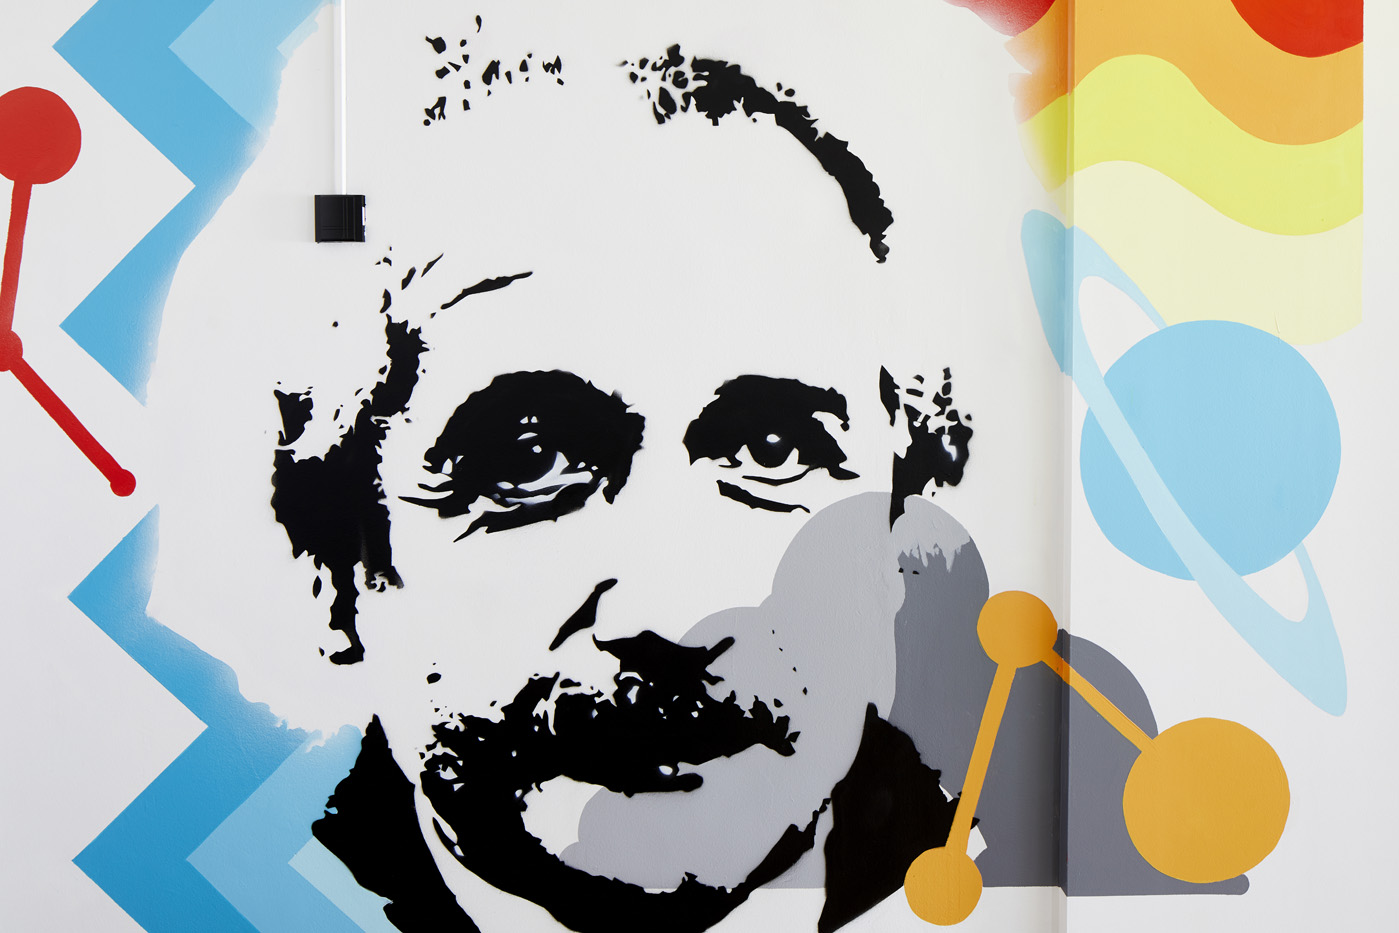 90 Degrees Albert Einstein Artwork Stencil Mural 460 Degrees